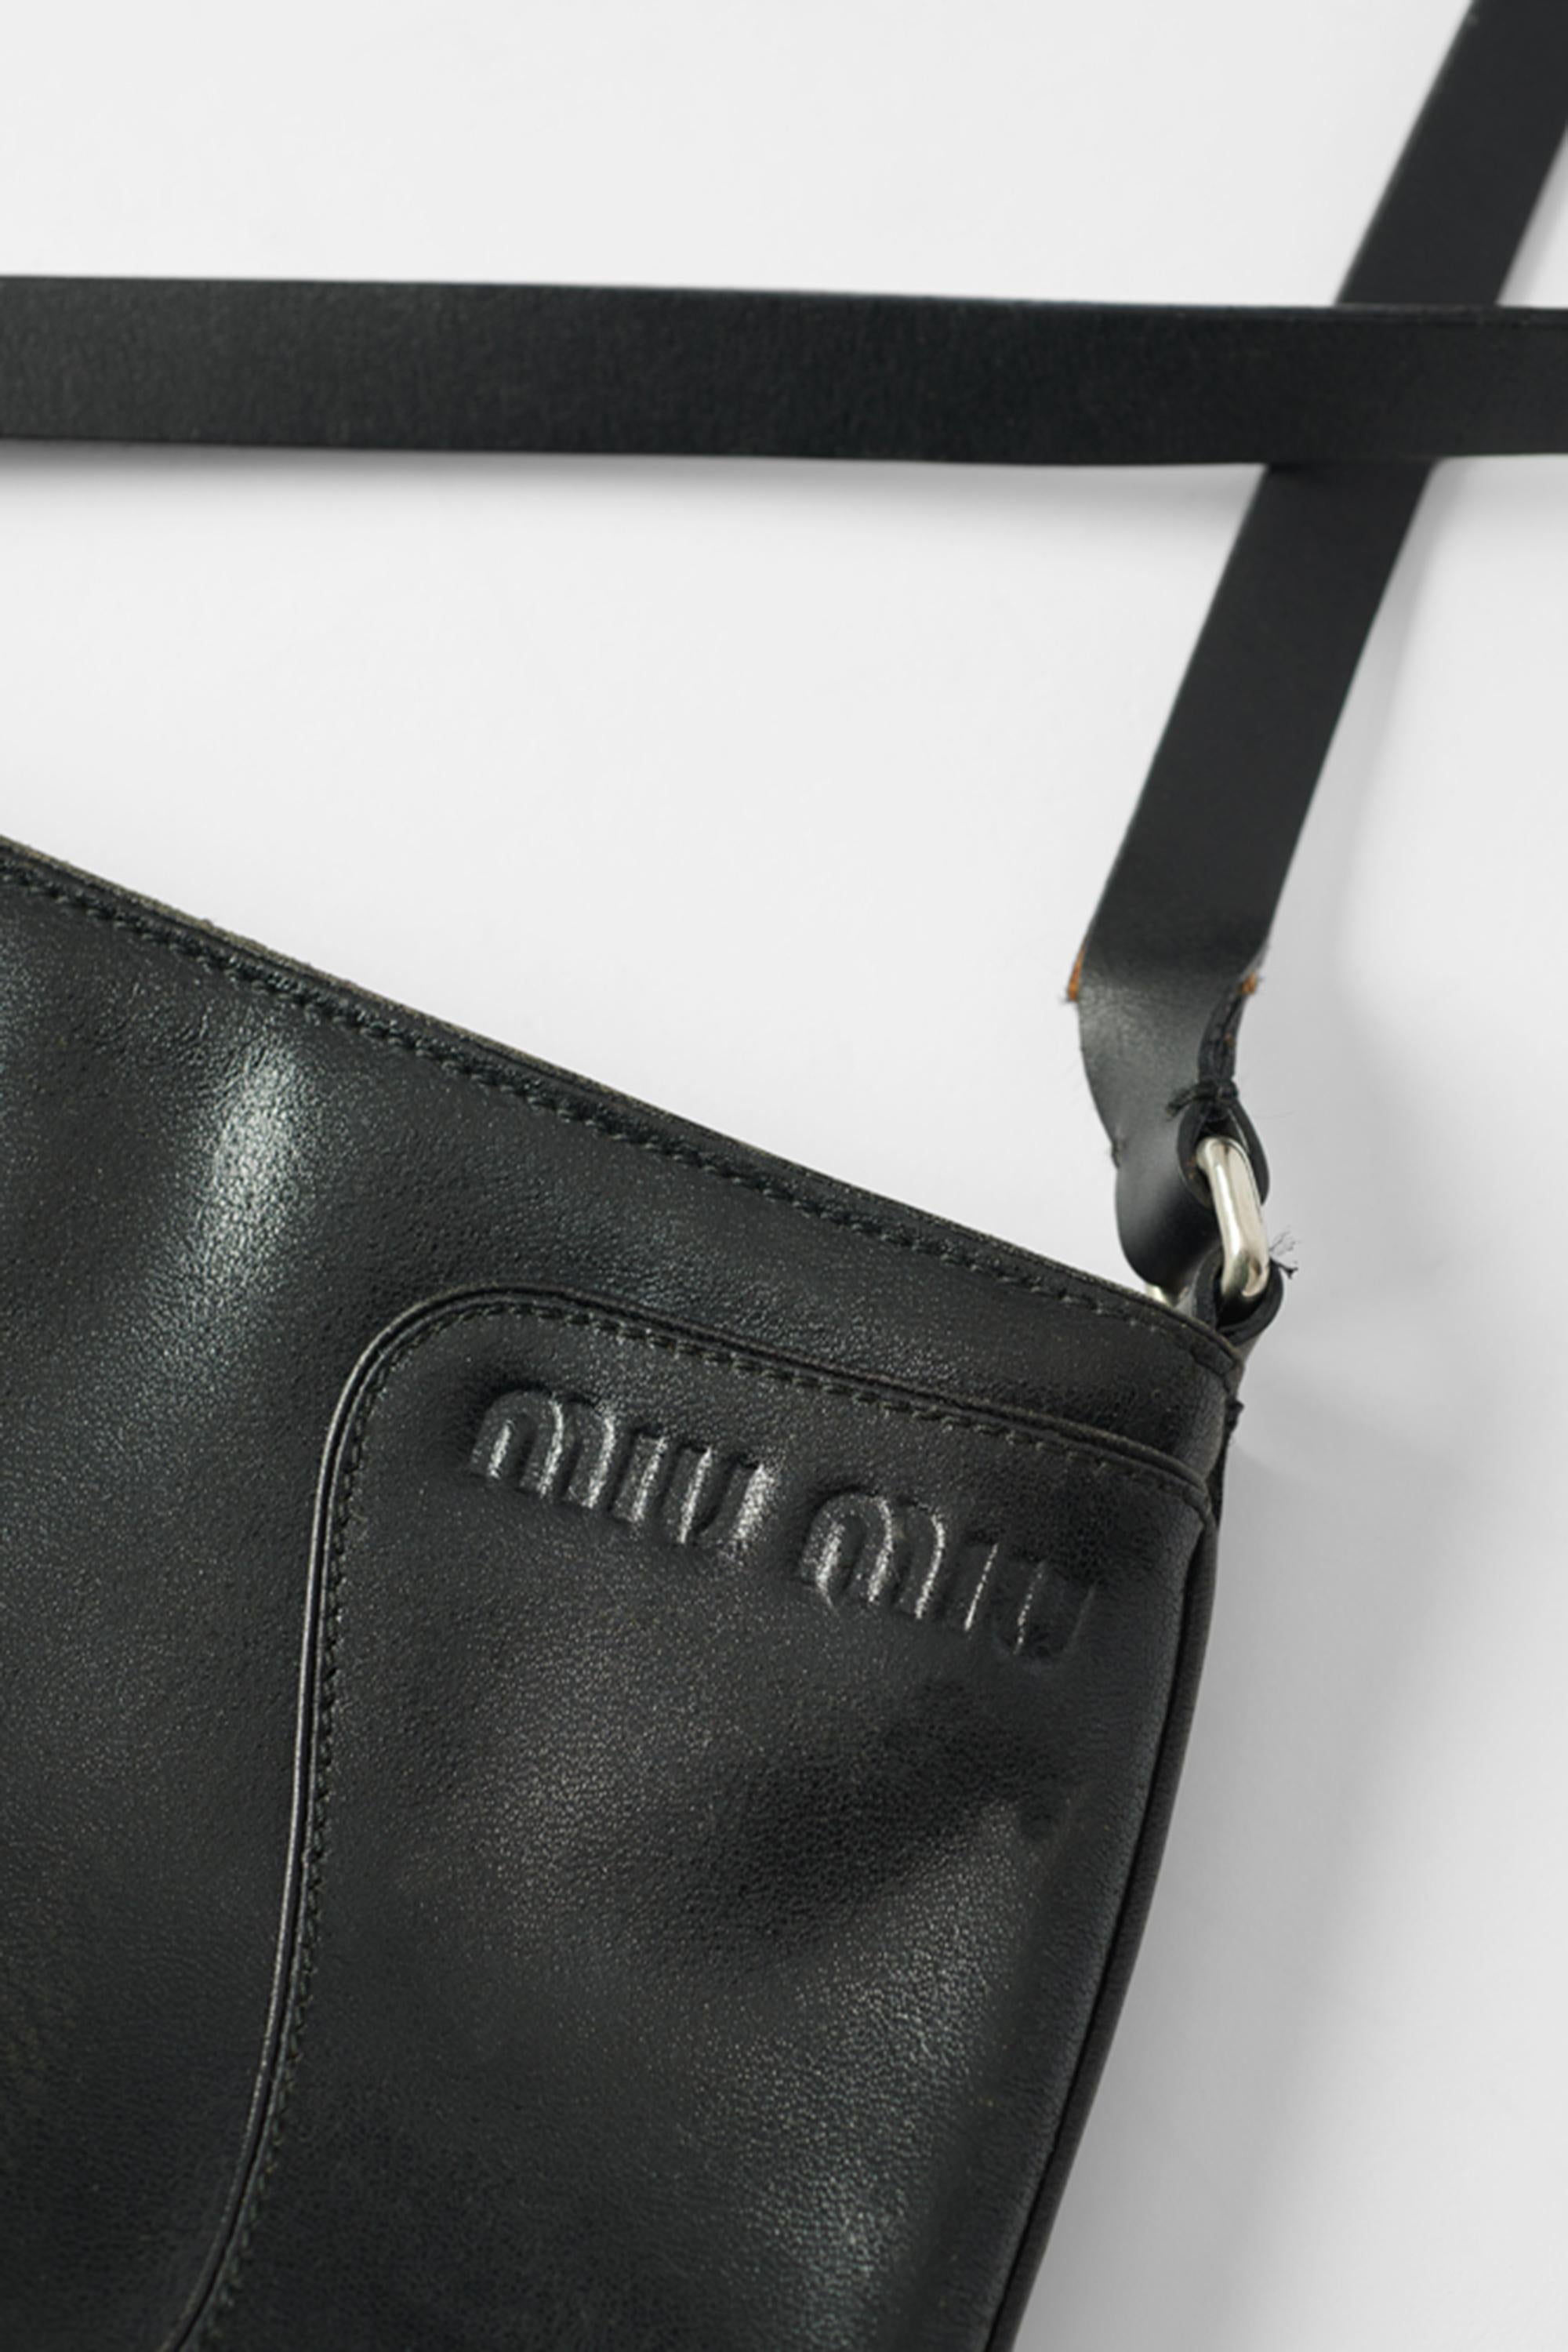 Women's Miu Miu Vintage Black Leather & Neoprene Perforated Bag